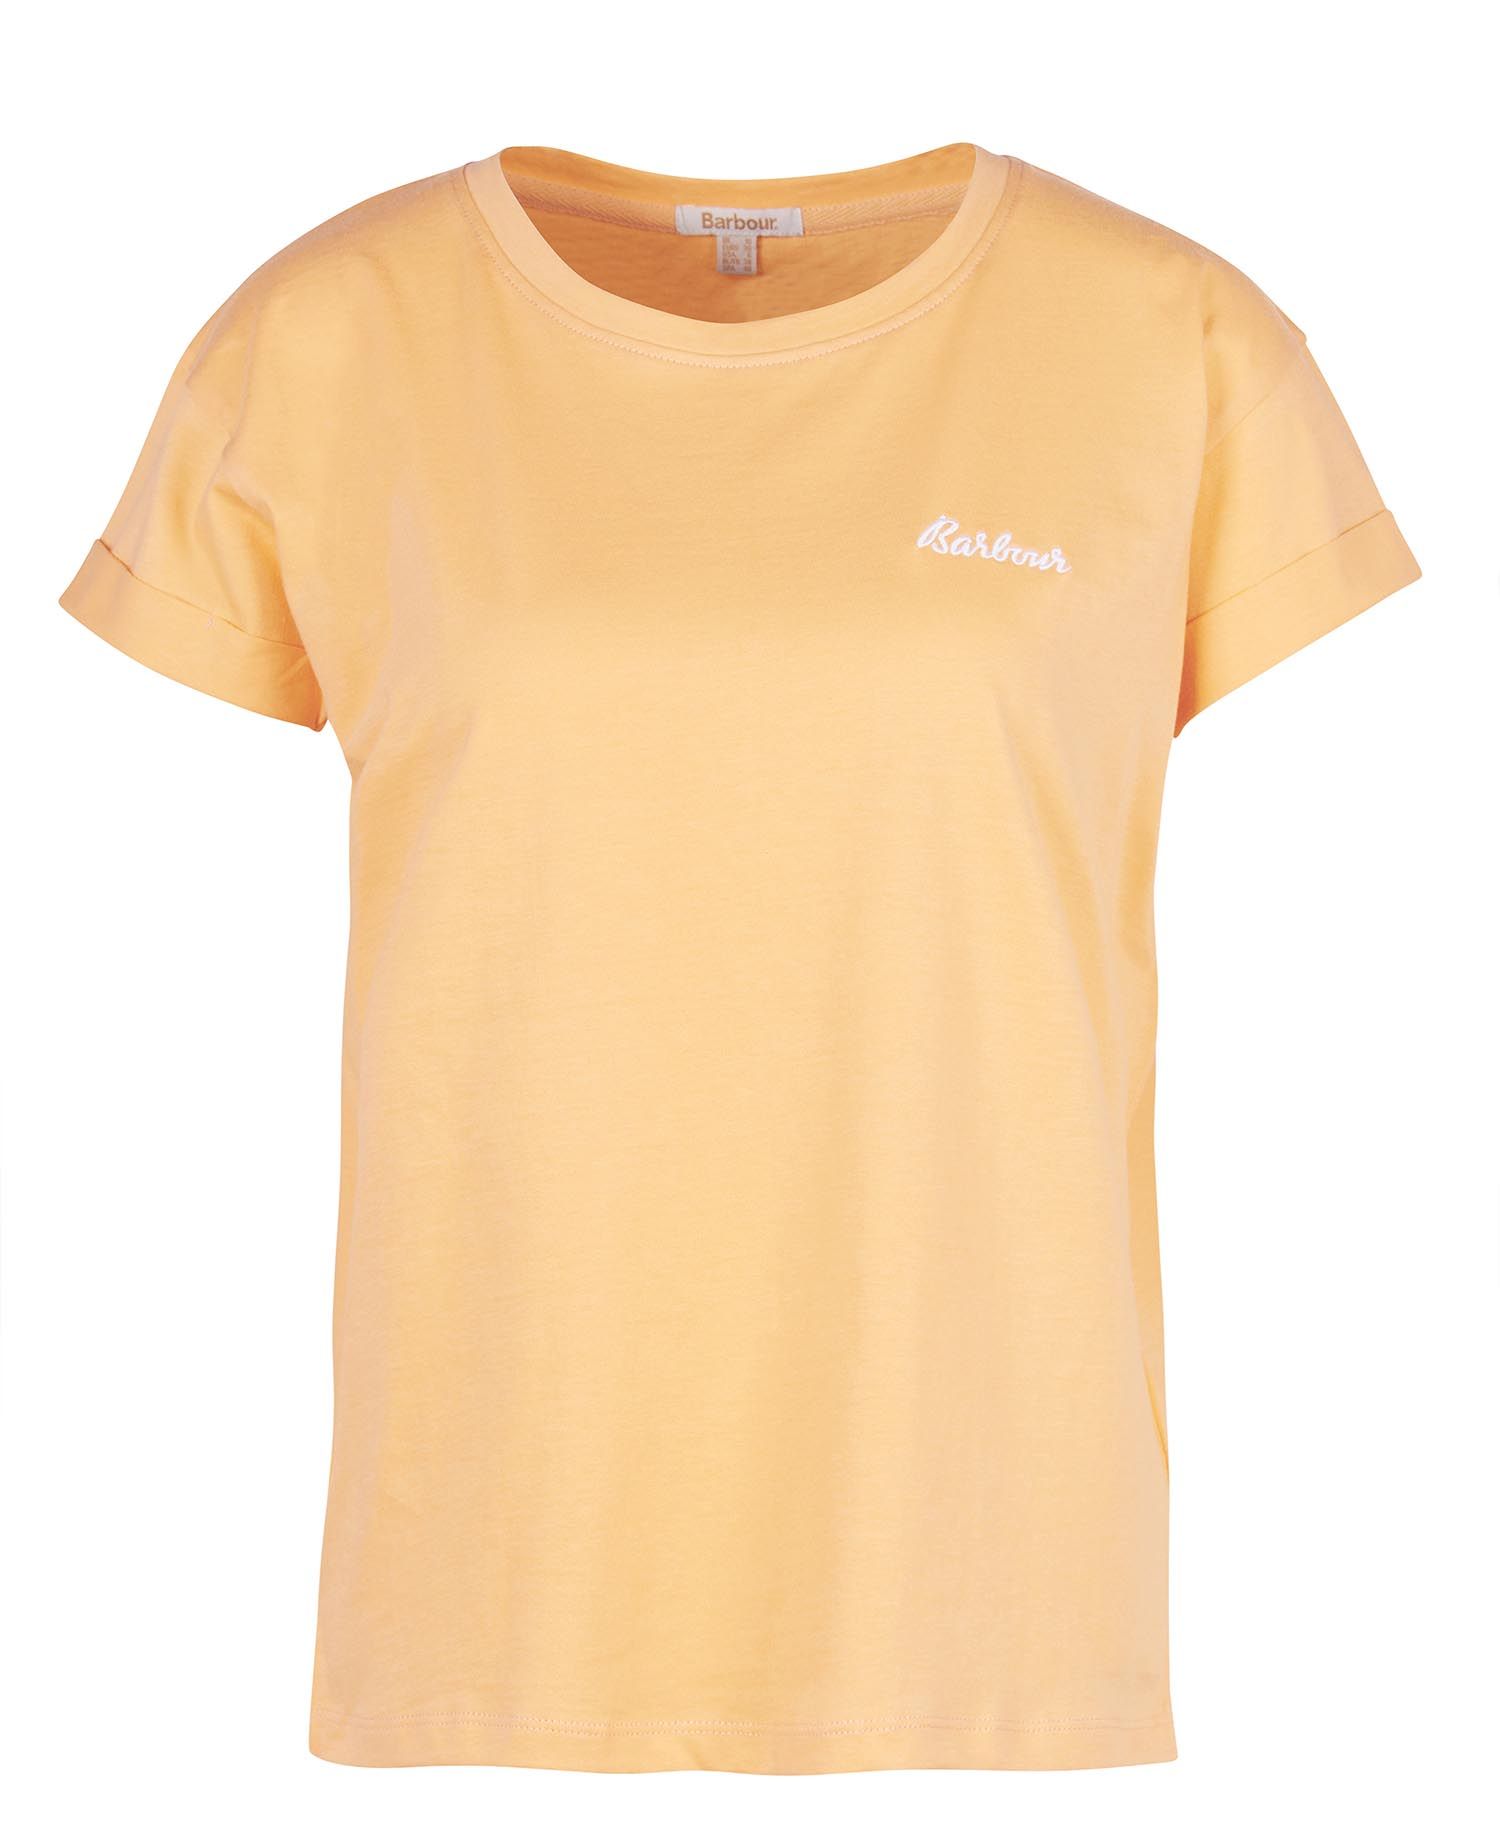 Barbour Kenmore T-Shirt Orange